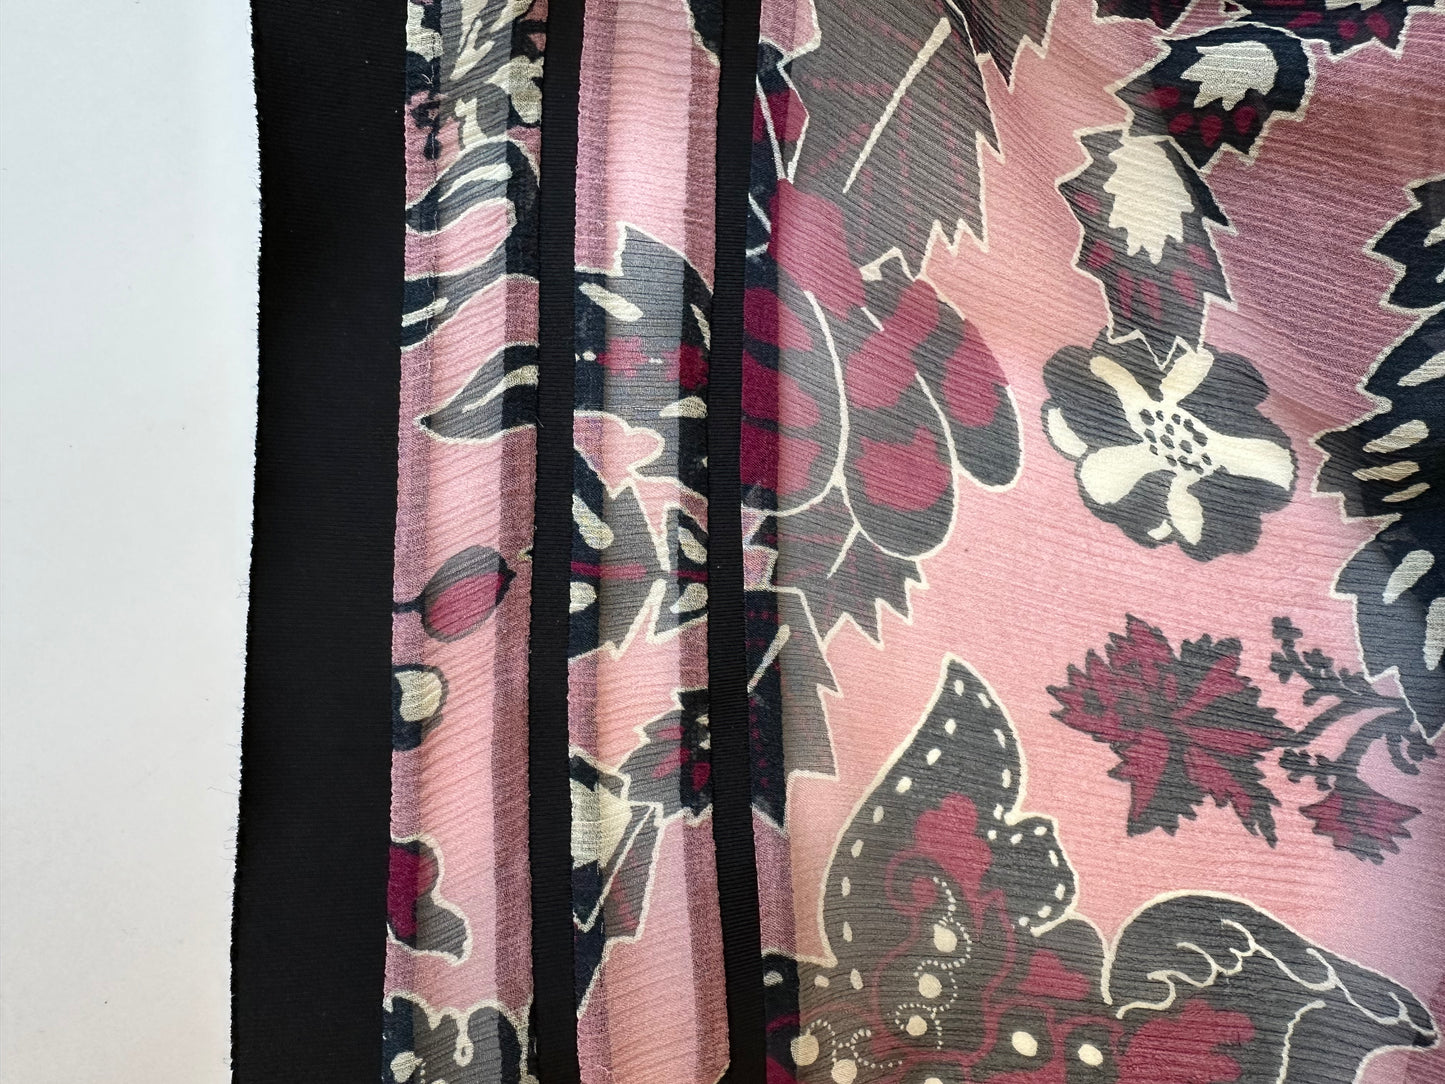 Chloe Cactus Print Silk Pink and Burgundy Maxi Dress Size 36